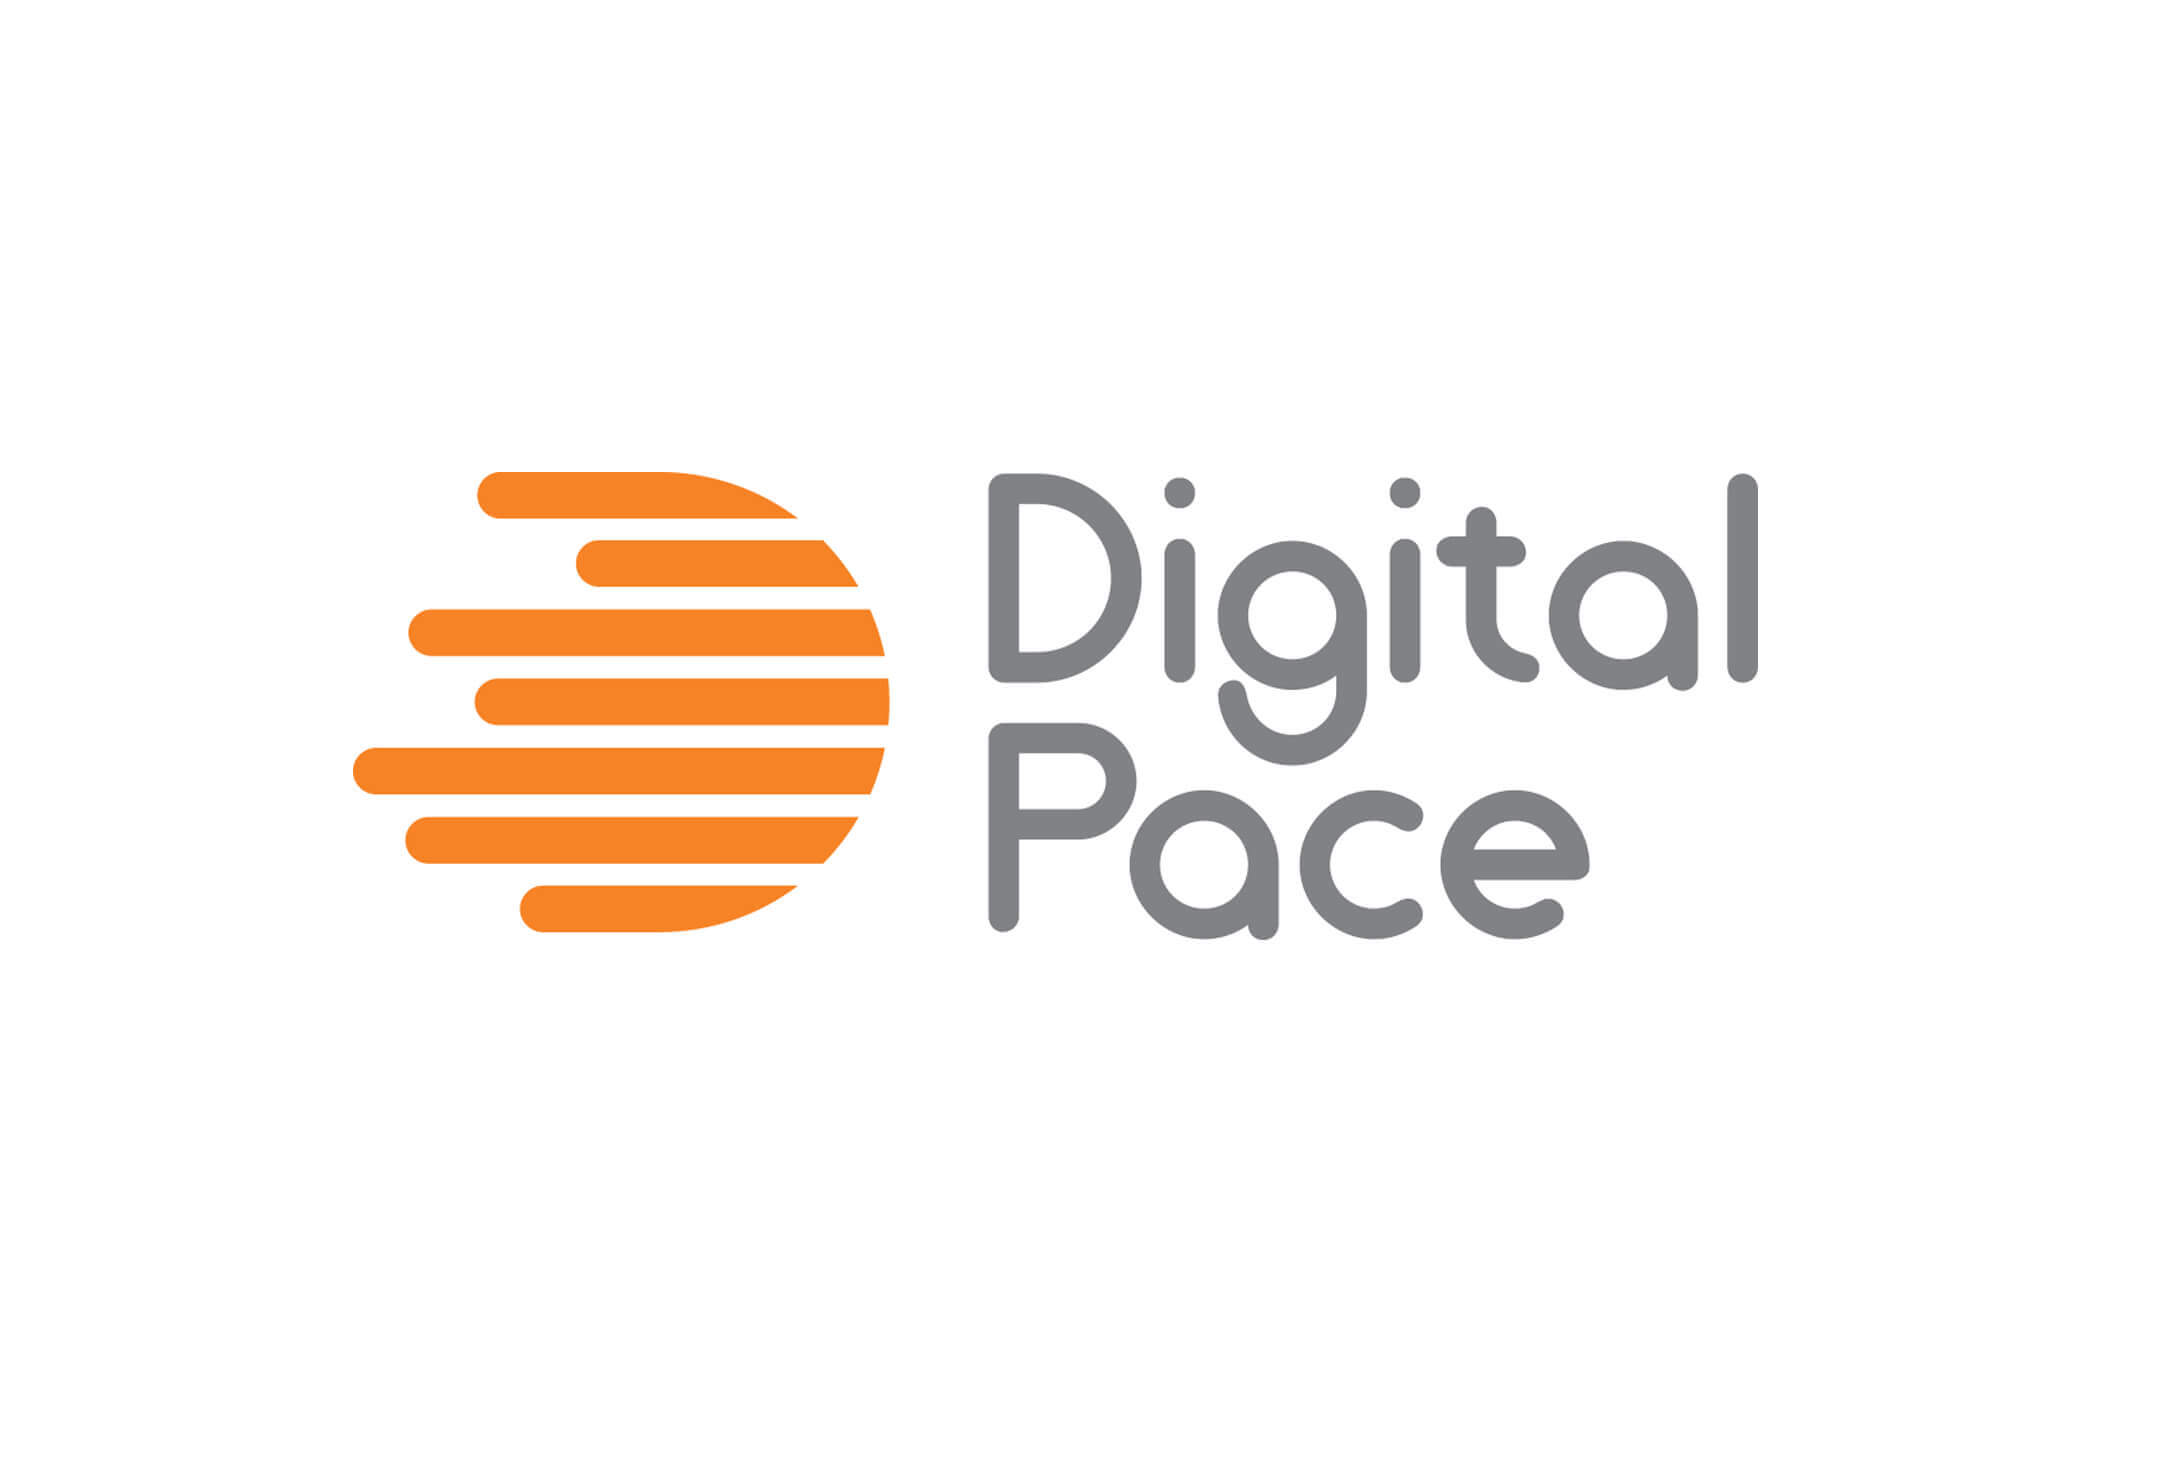 Digital Pace - select logo